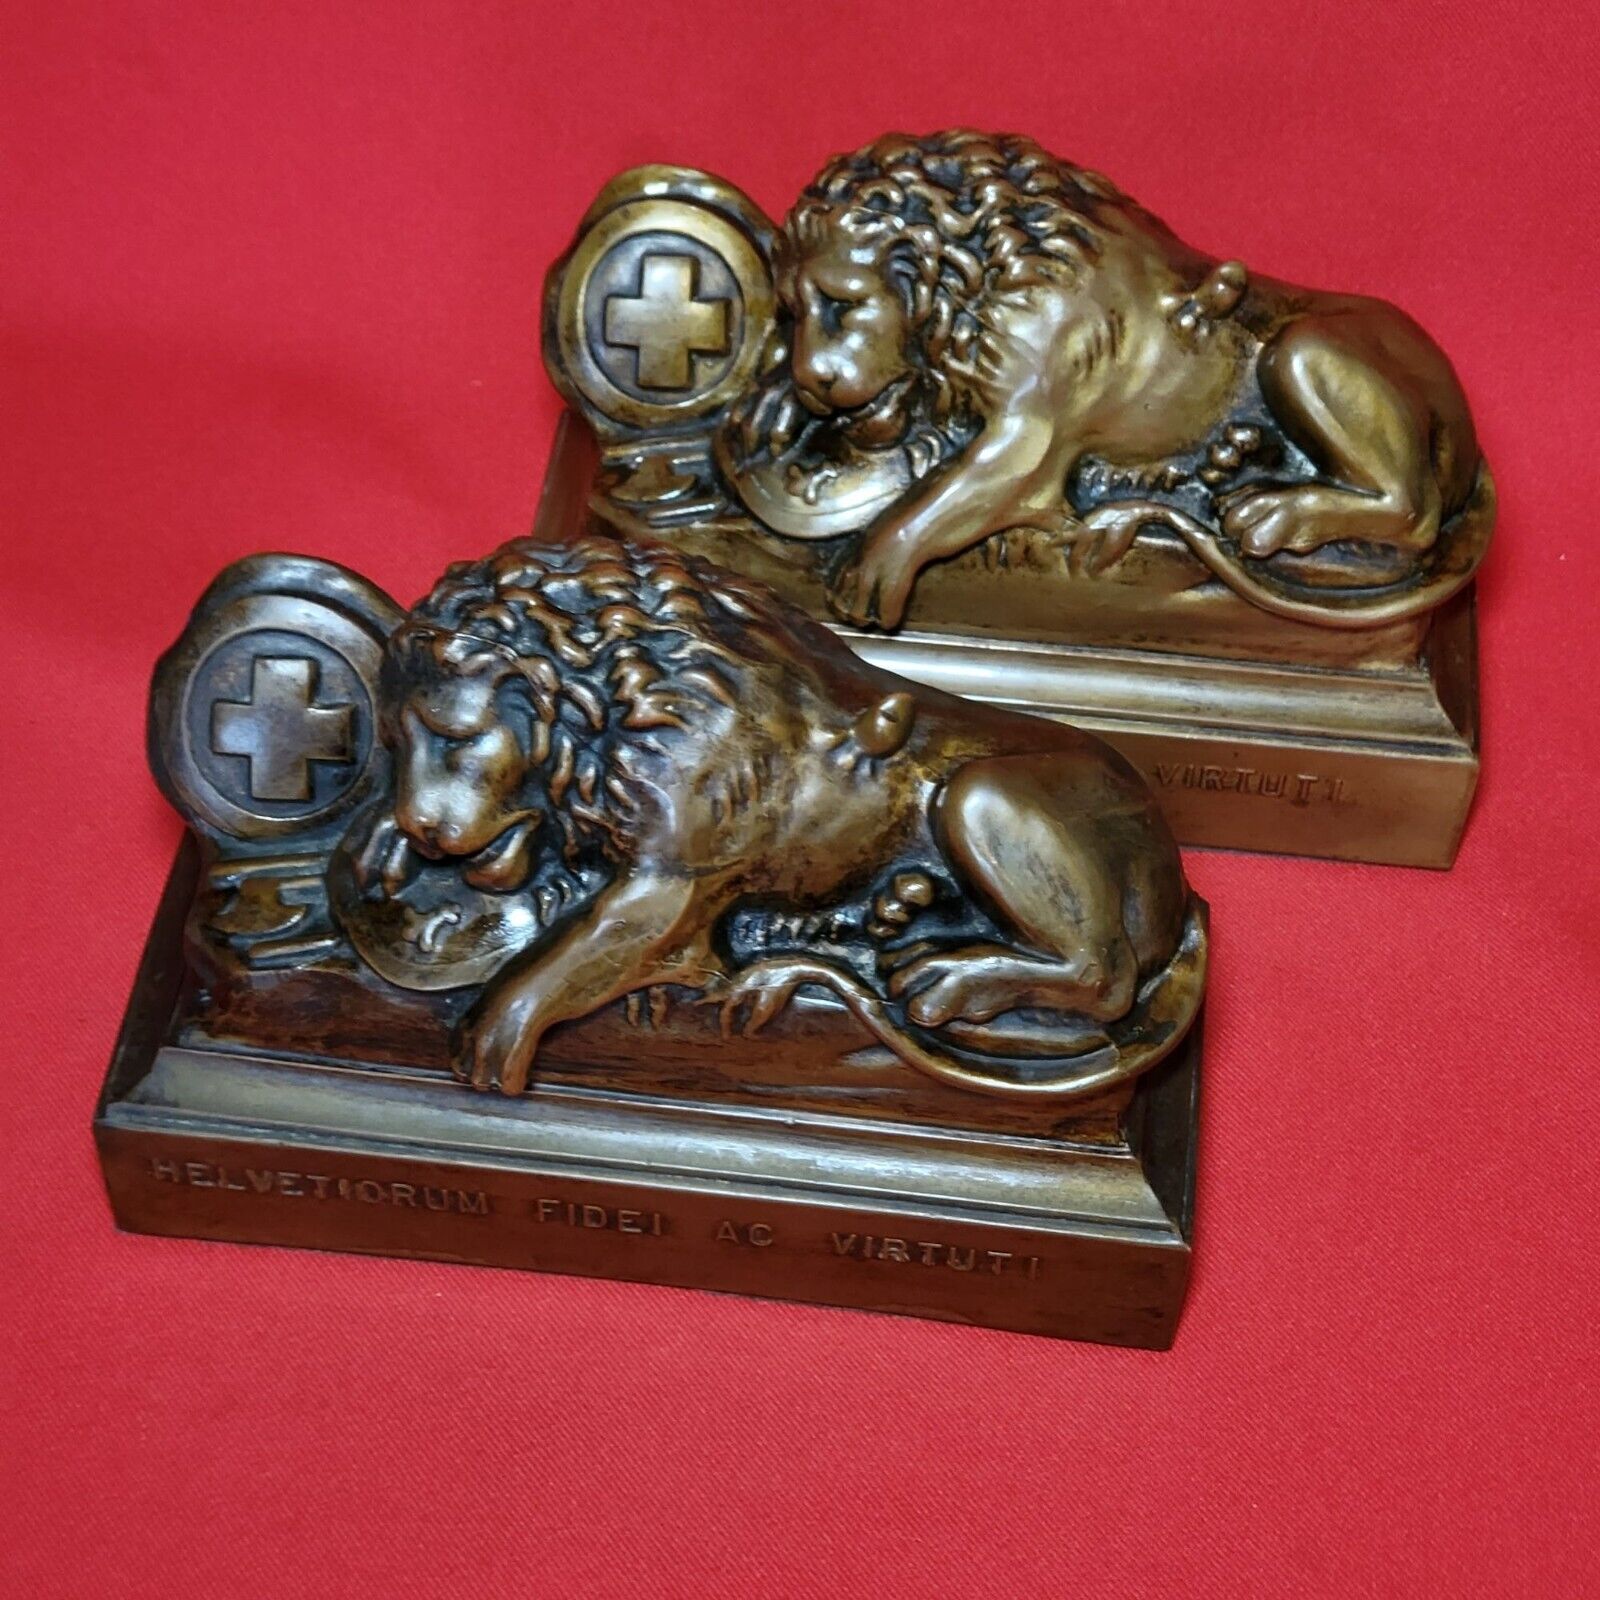 Antique Swiss Guard Bronze Lion Bookends Helvetiorum Fidei AC Virtuti 1570